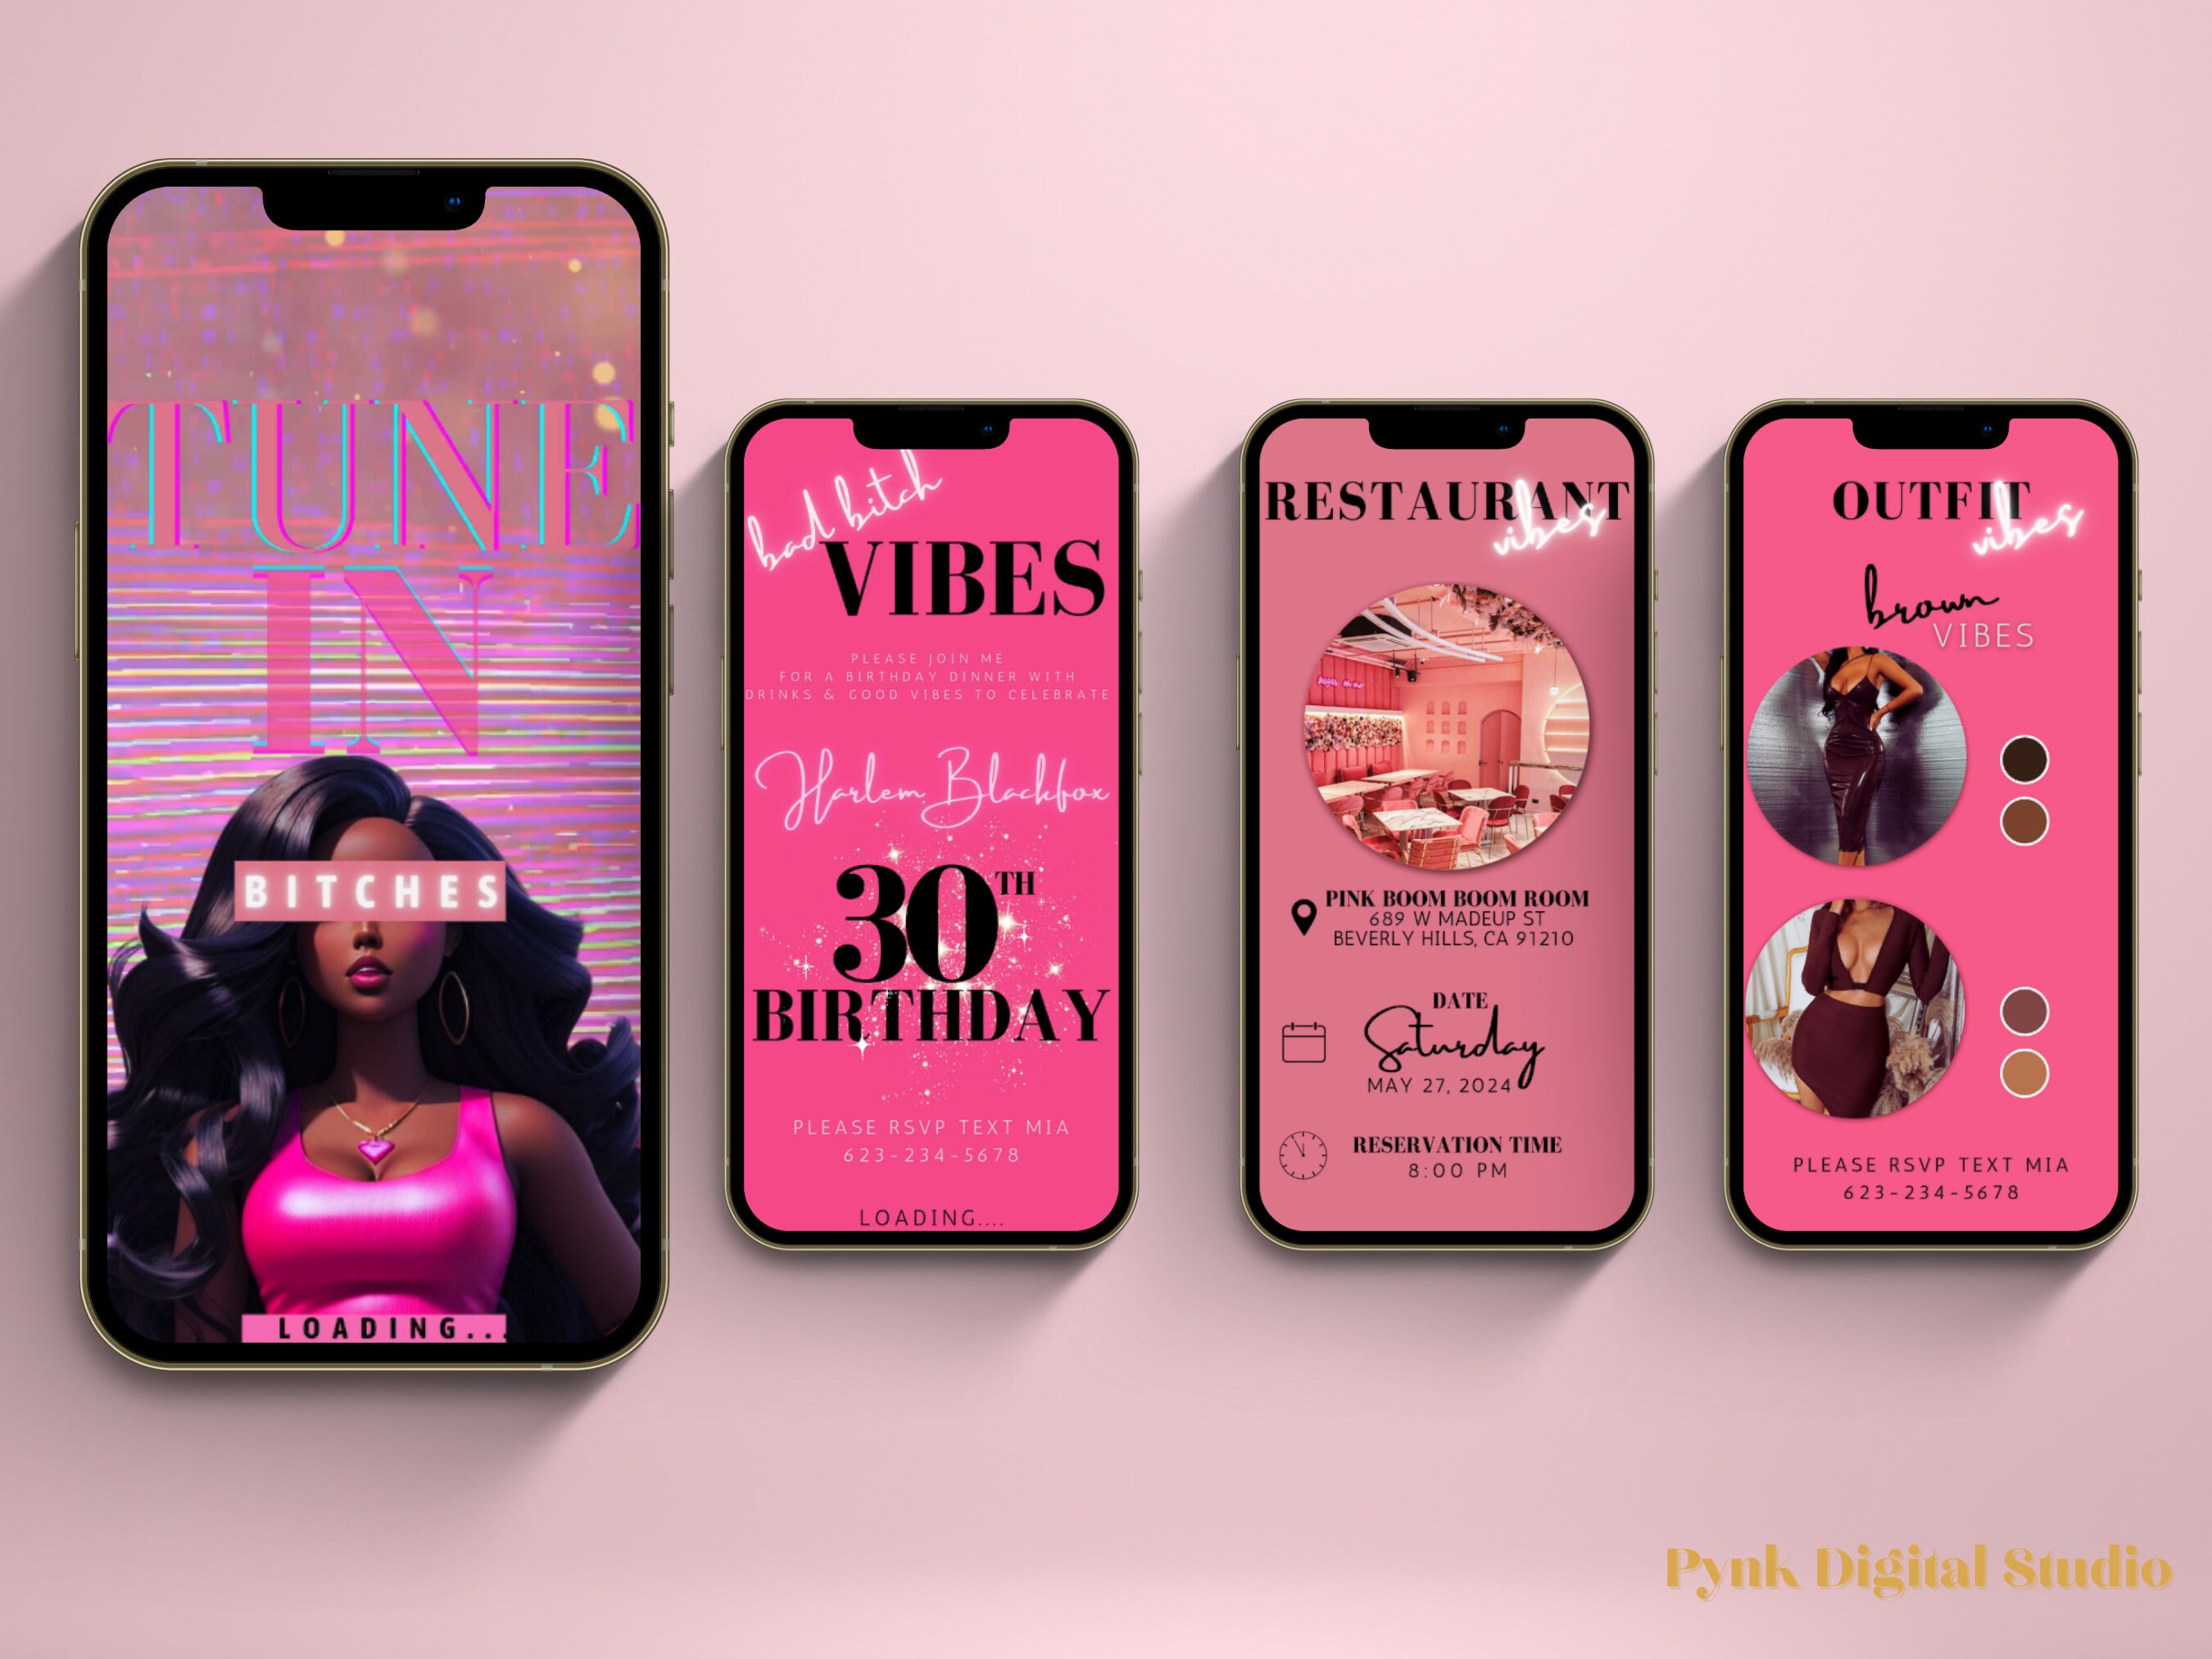 Pink Digital Birthday Invitation for Her Birthday Party, Pink Luxury ...